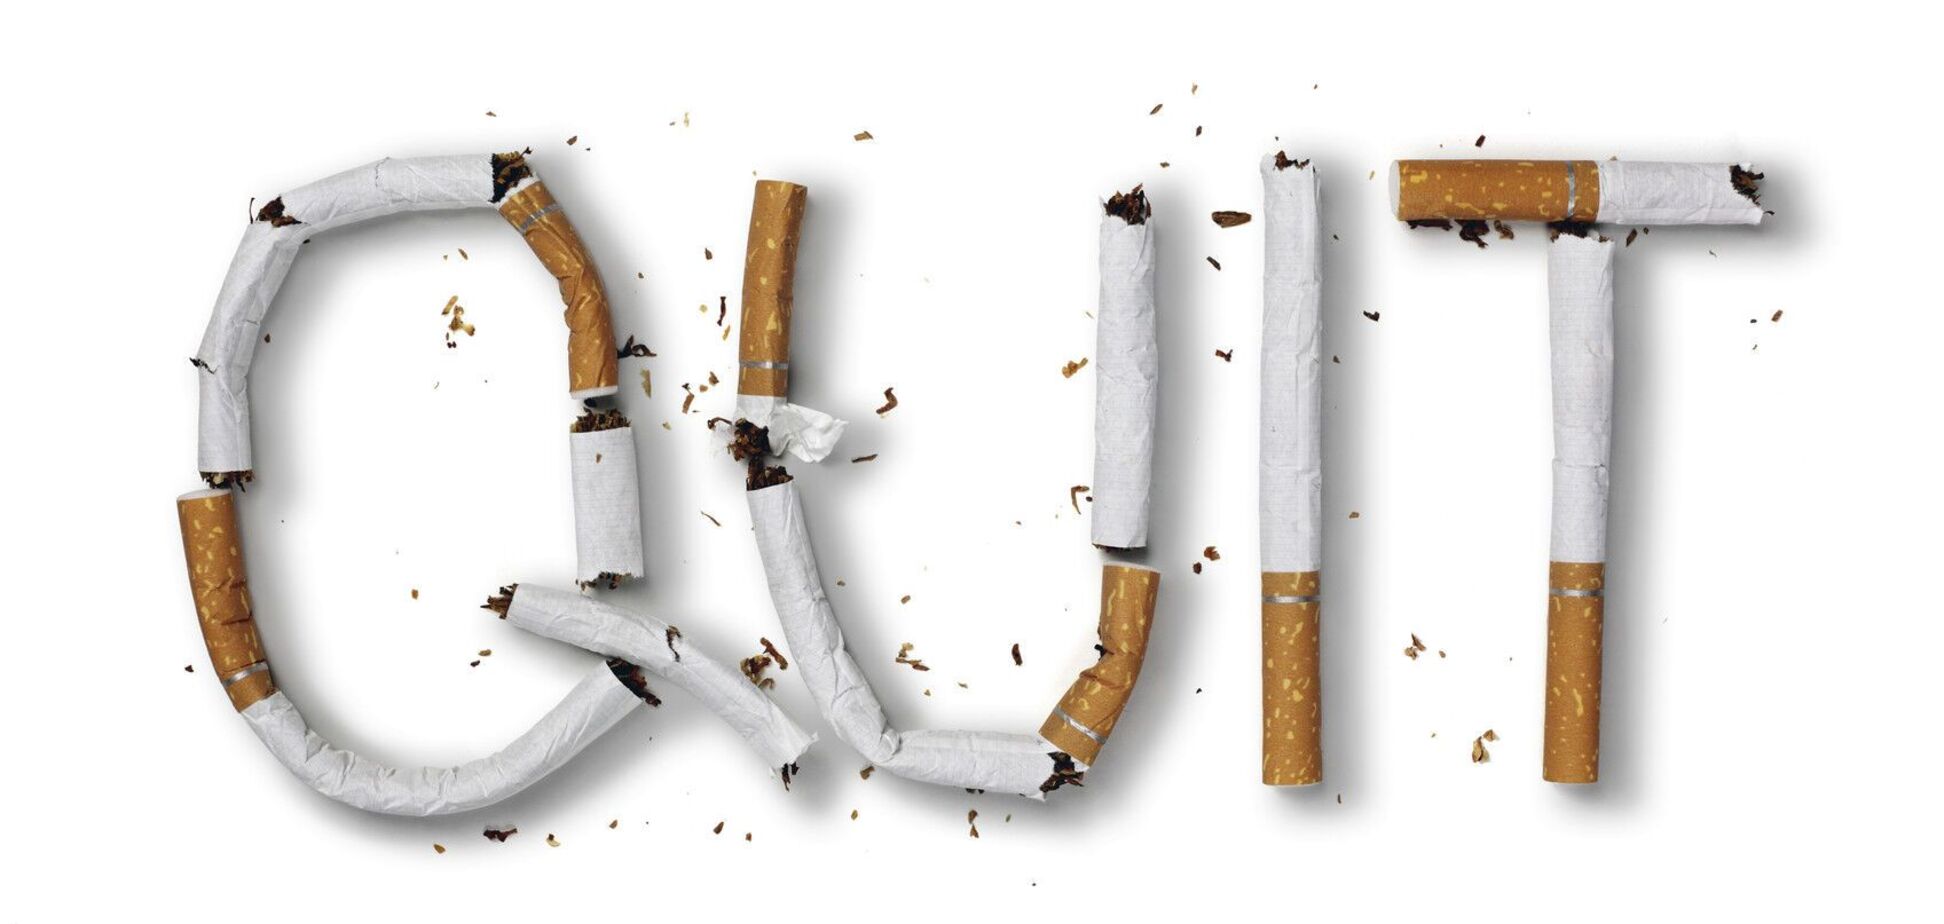 Запрет – не выход: врачи советуют найти менее вредную альтернативу сигарете